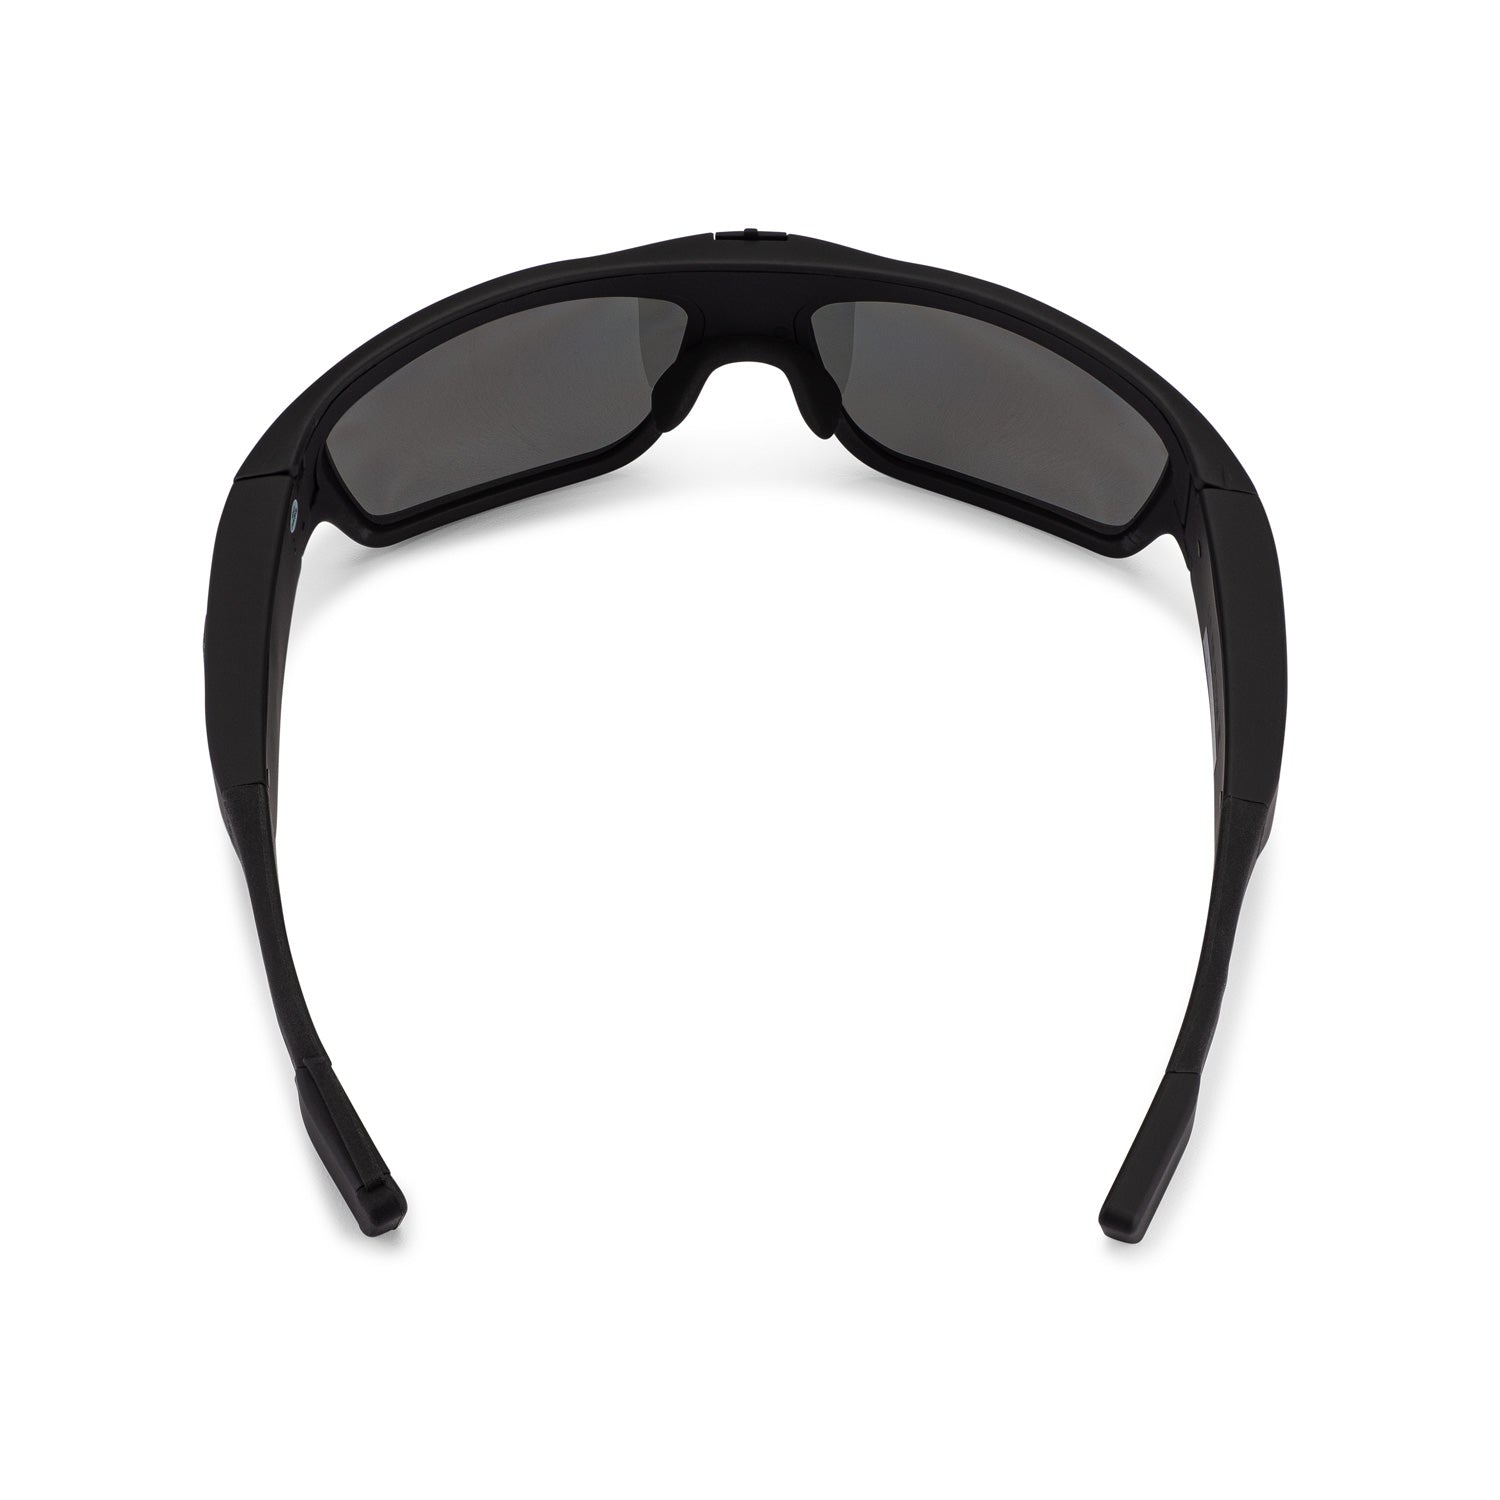 iVue Denali 2K/1080p HD Camera Glasses POV Video Recording Sport Sunglasses DVR Eyewear, Up to 60fps